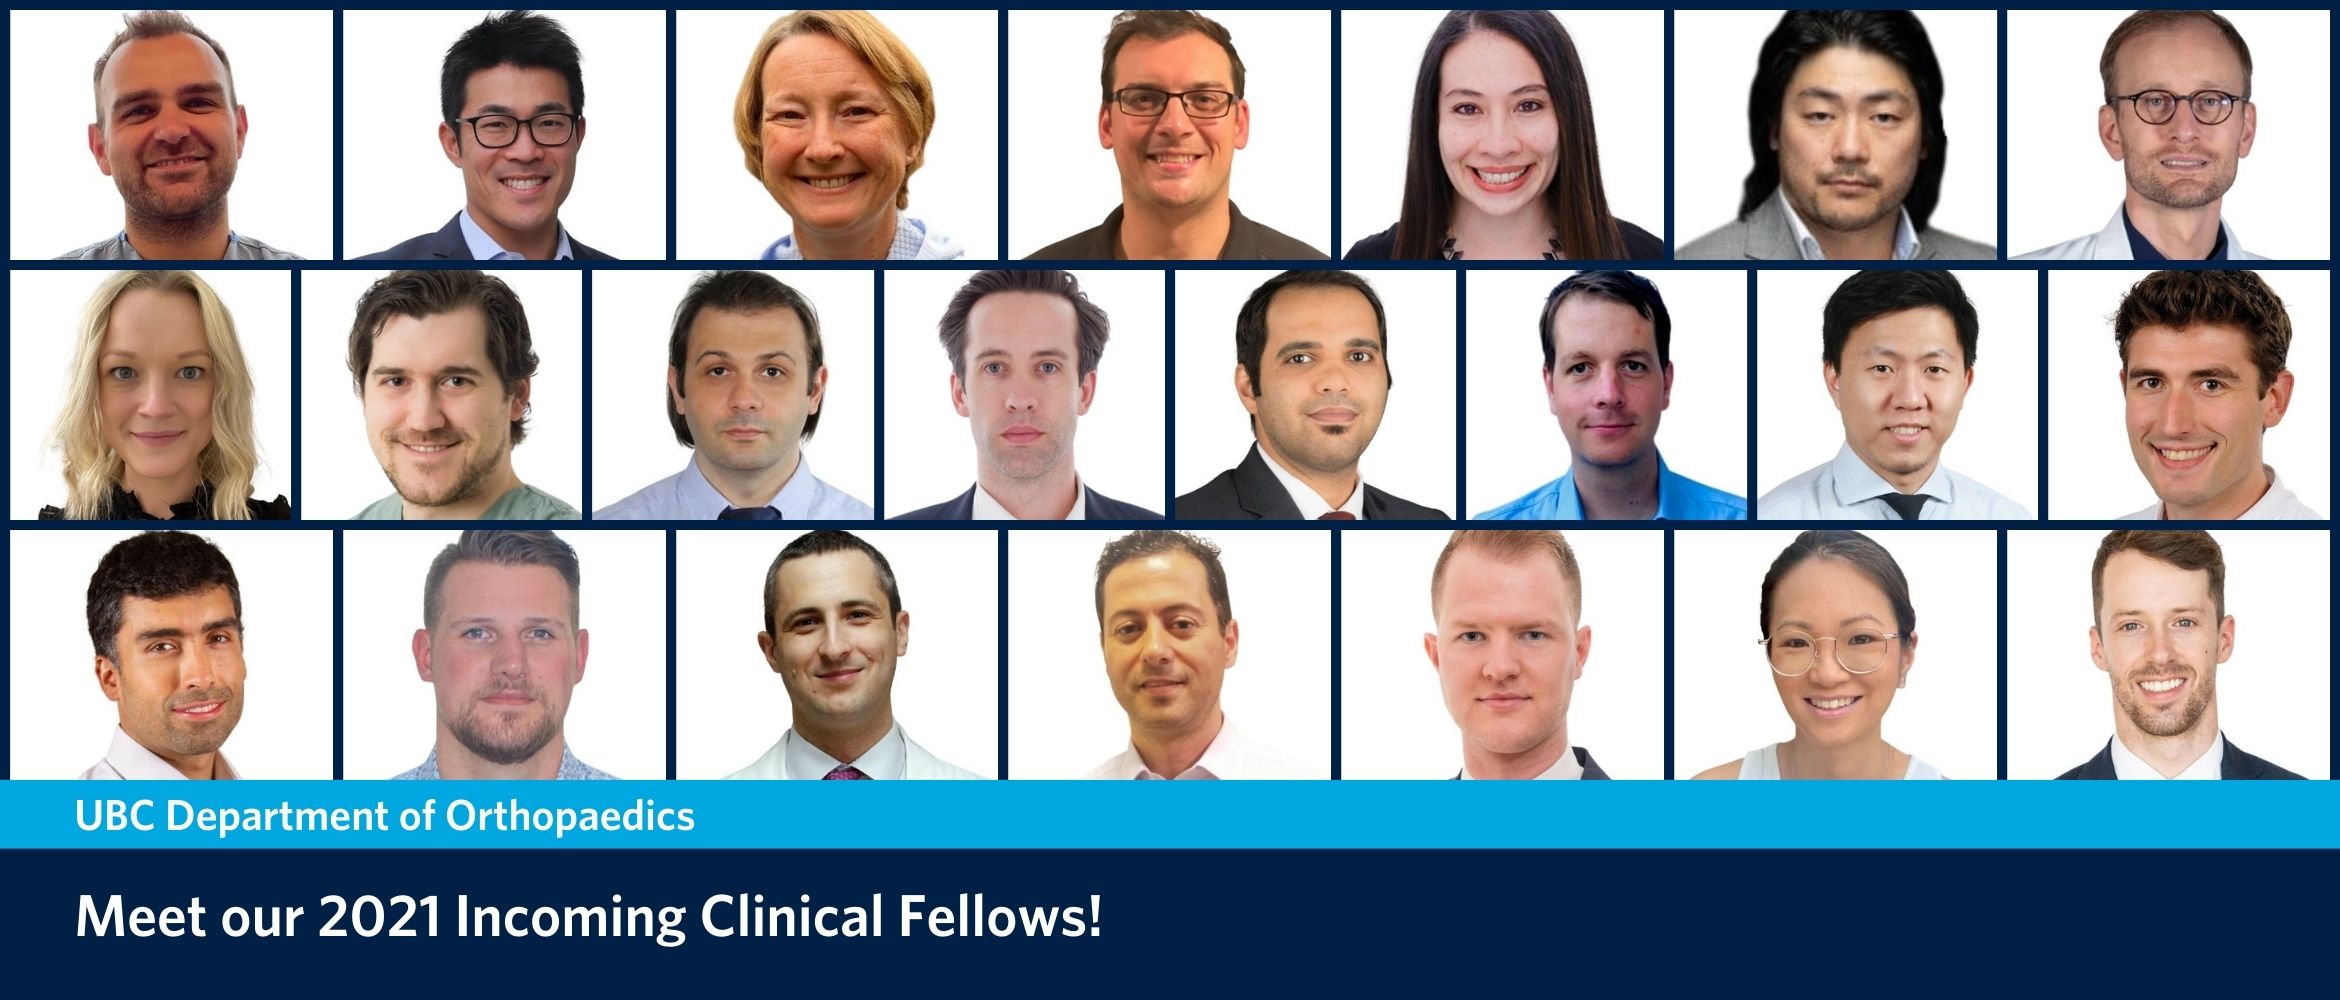 Meet our 2021 Incoming Clinical Fellows!